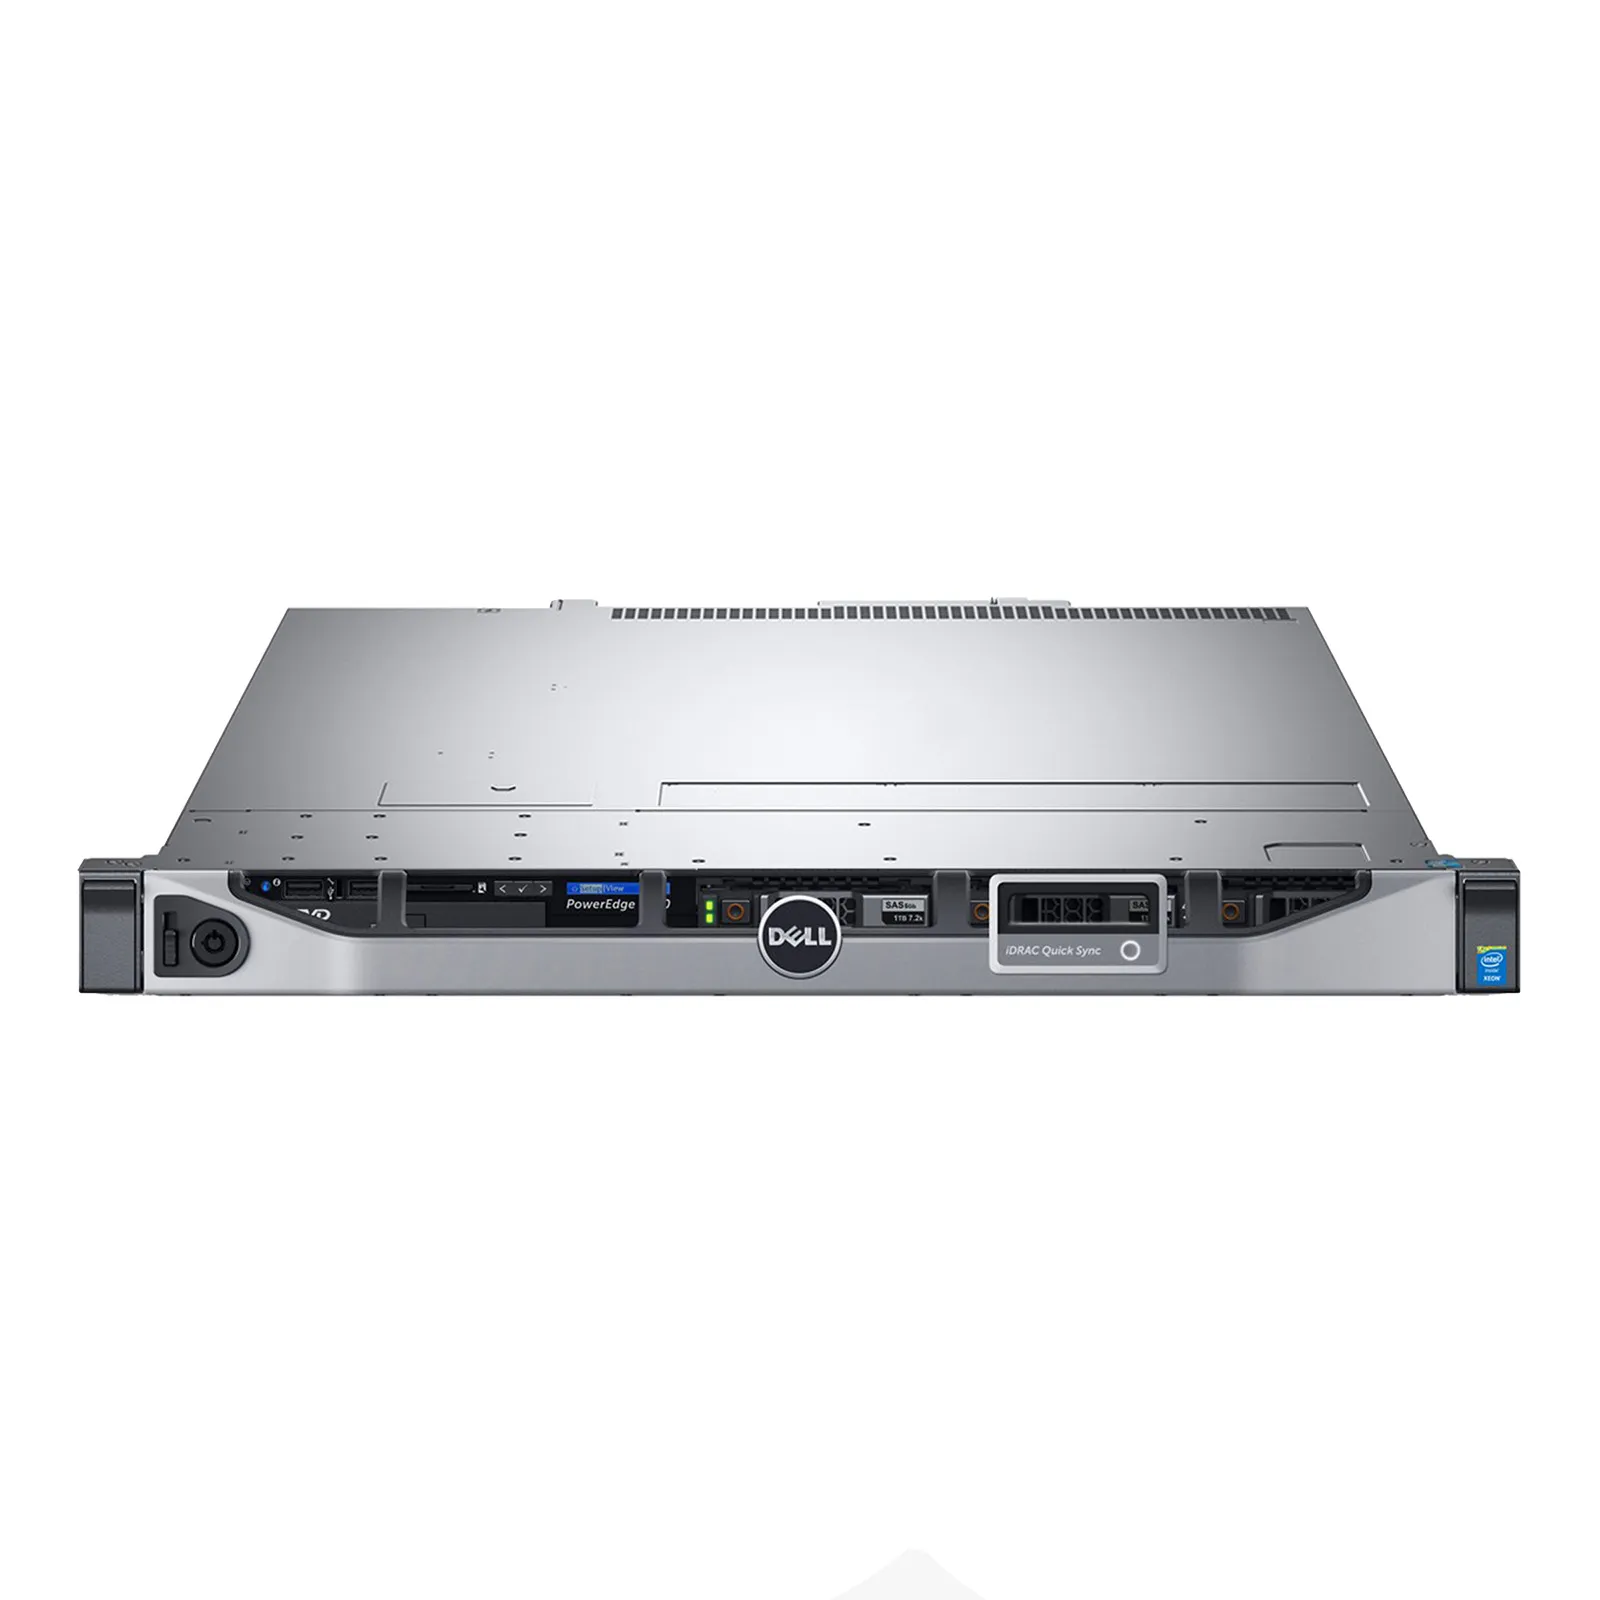 Dell PowerEdge R630 1U Rack Server